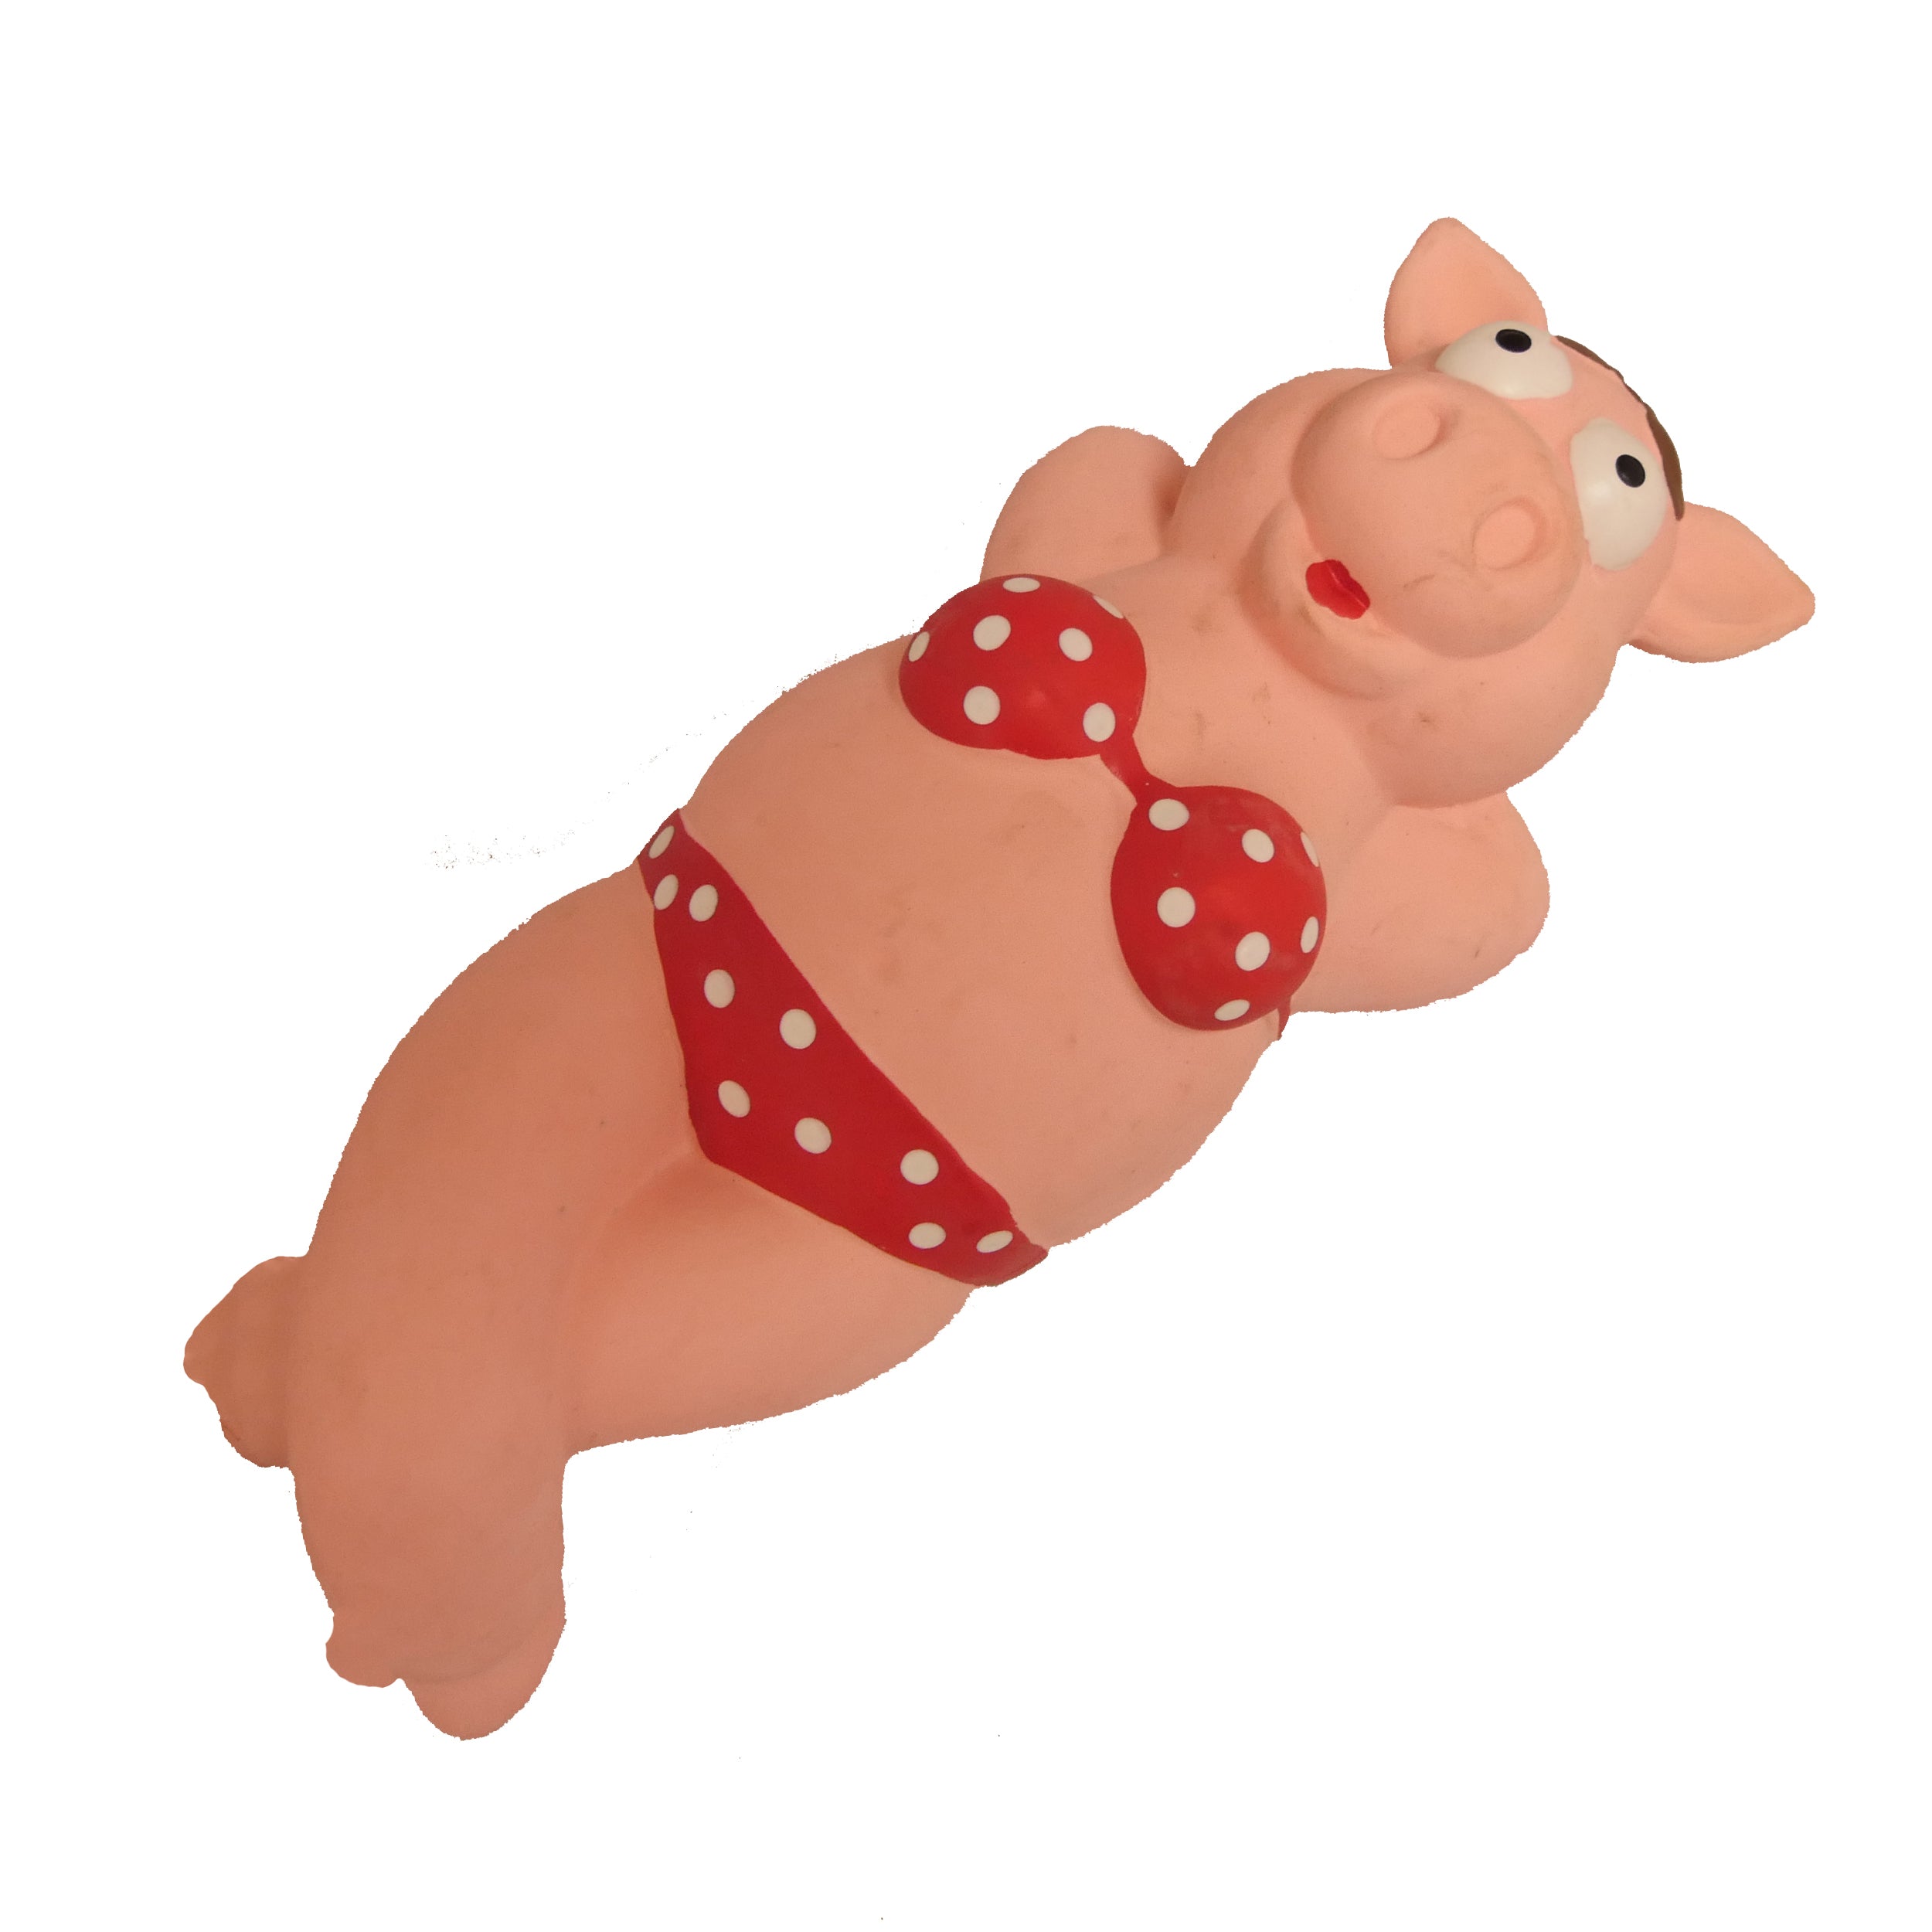 [Dog toy] pink rubber bikini pig toy